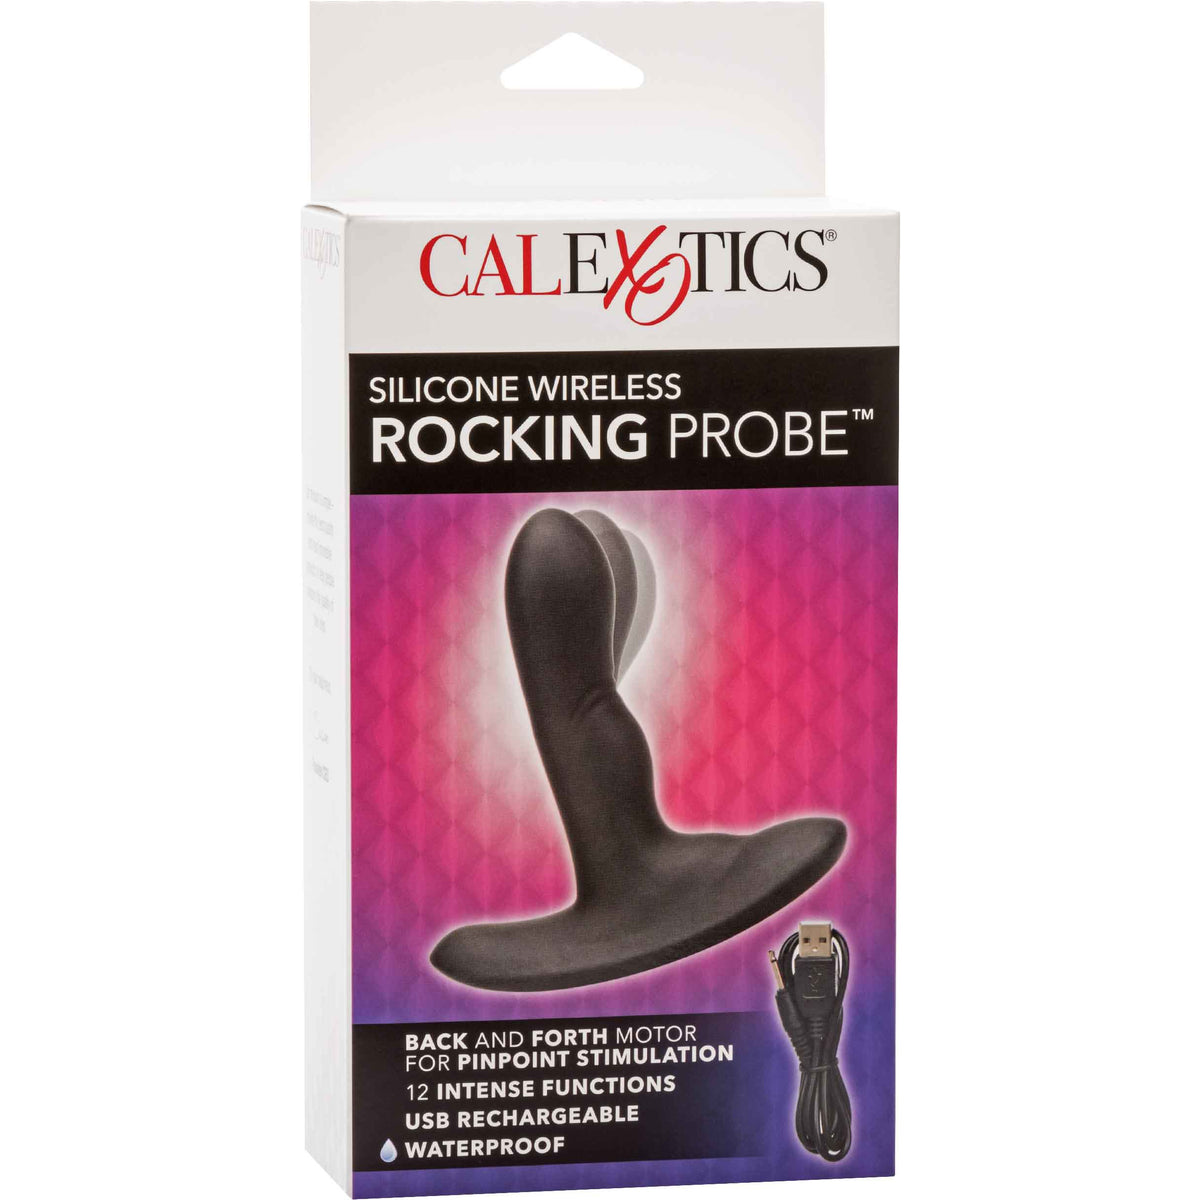 CalExotics Silicone Wireless Rocking Probe- Black